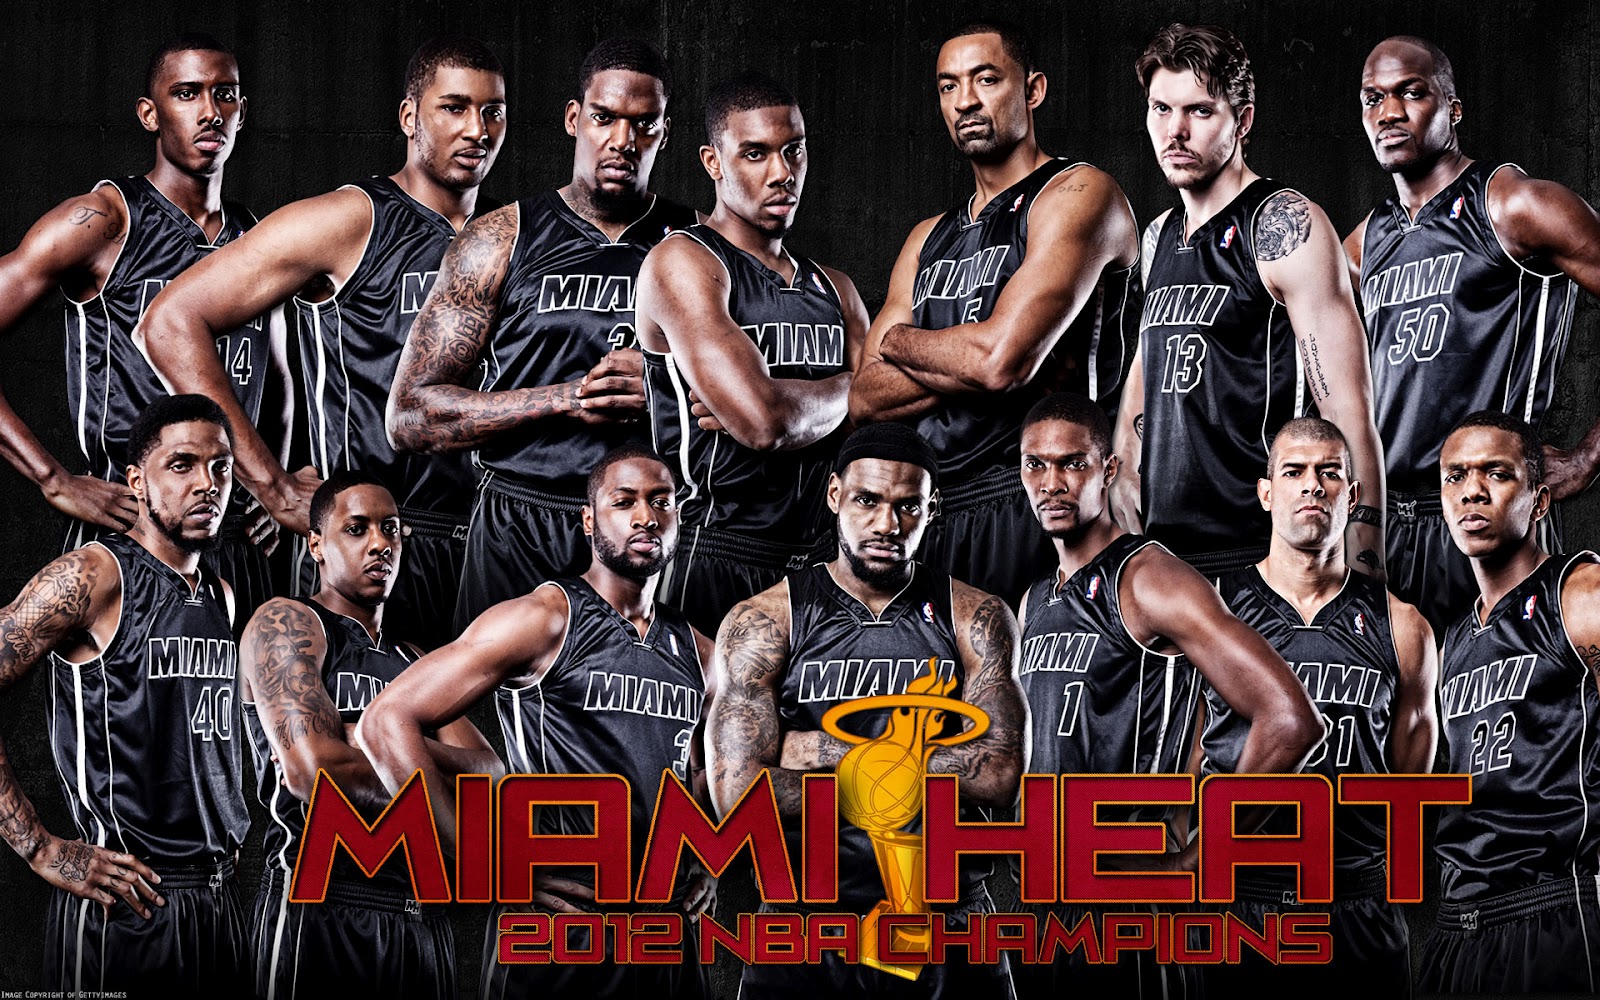 http://3.bp.blogspot.com/-pQQboUbSoDg/UD-fJXQa2sI/AAAAAAAAFuE/io6k8IewGcs/s1600/Miami-Heat-2012-NBA-Champions-Roster-Wallpaper-BasketWallpapers.com-.jpg